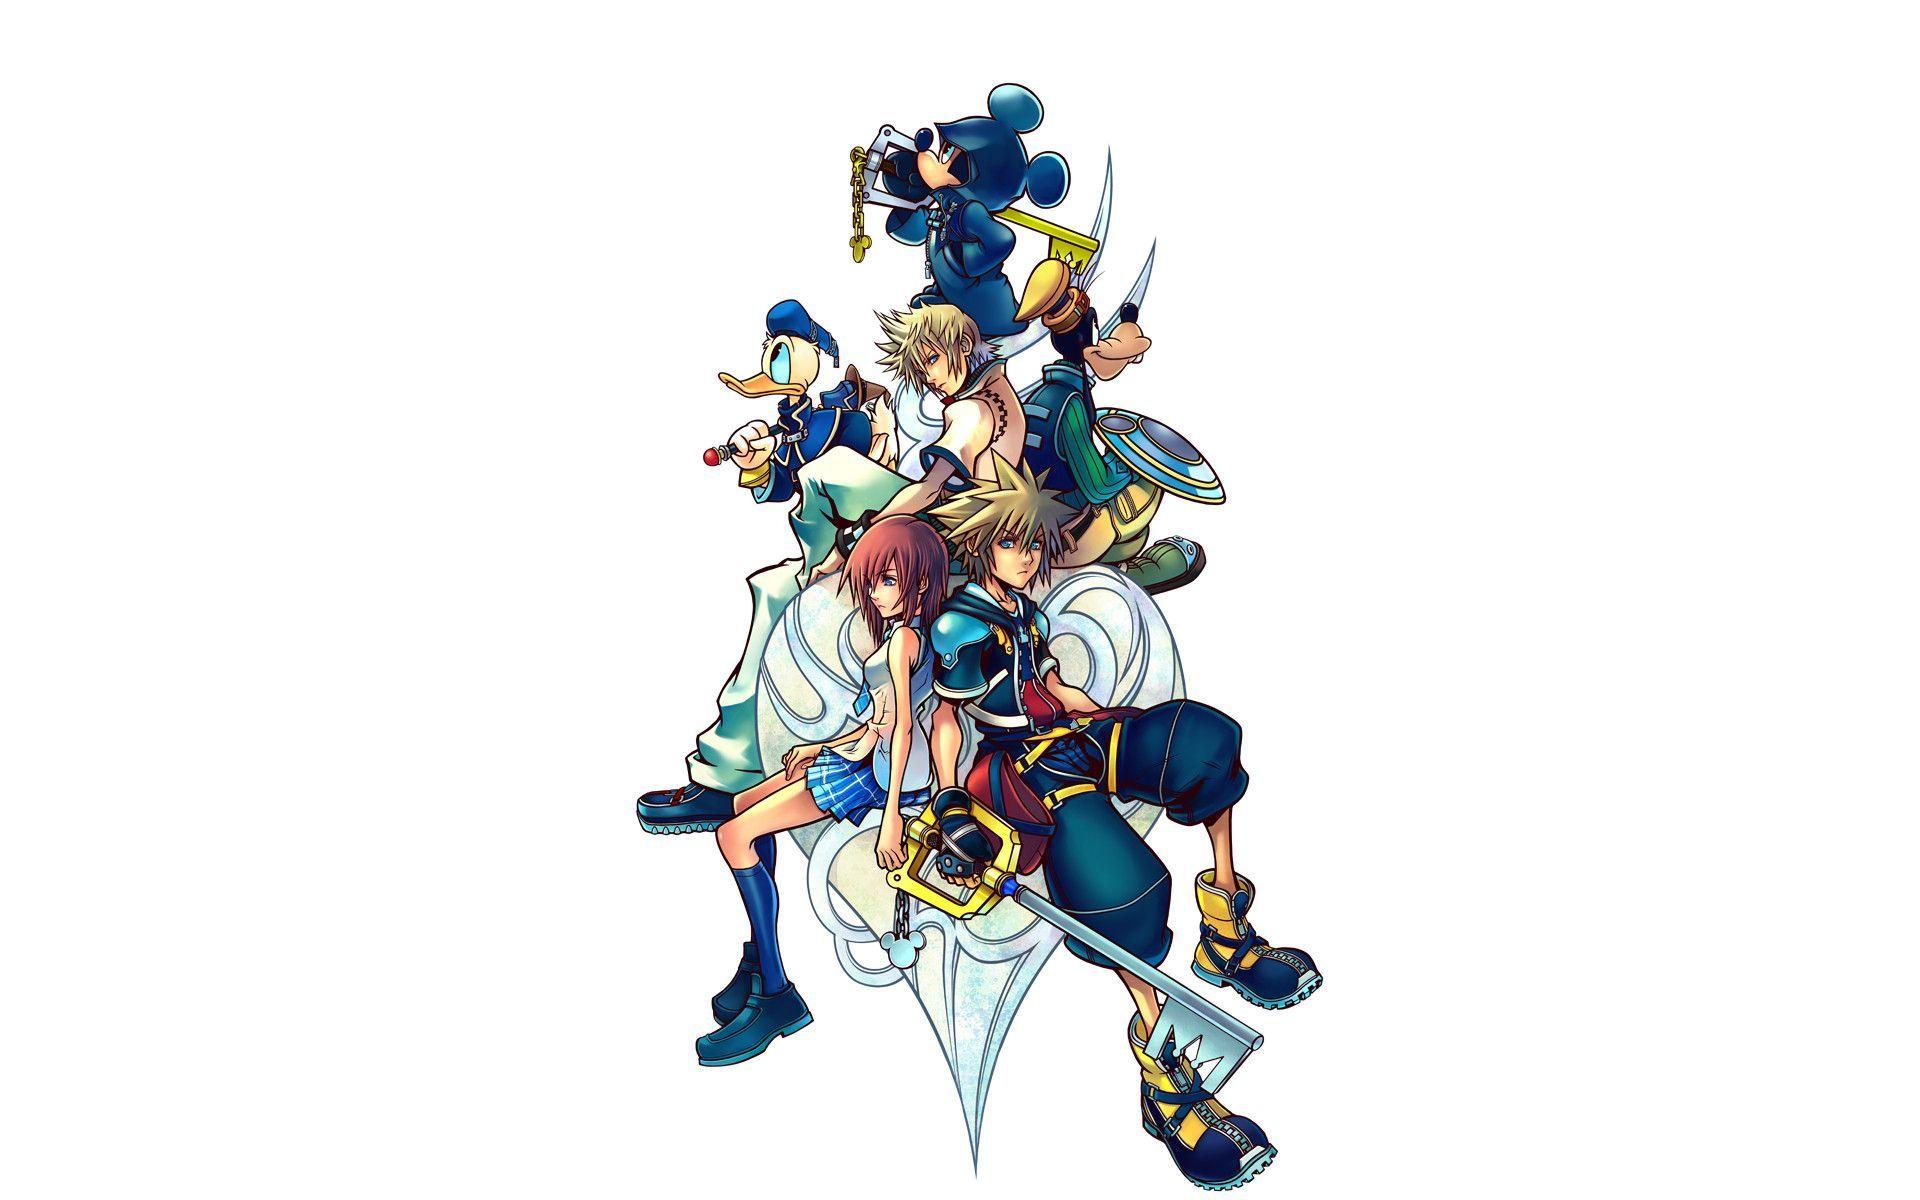 Kingdom Hearts Wallpapers - Top Free Kingdom Hearts Backgrounds